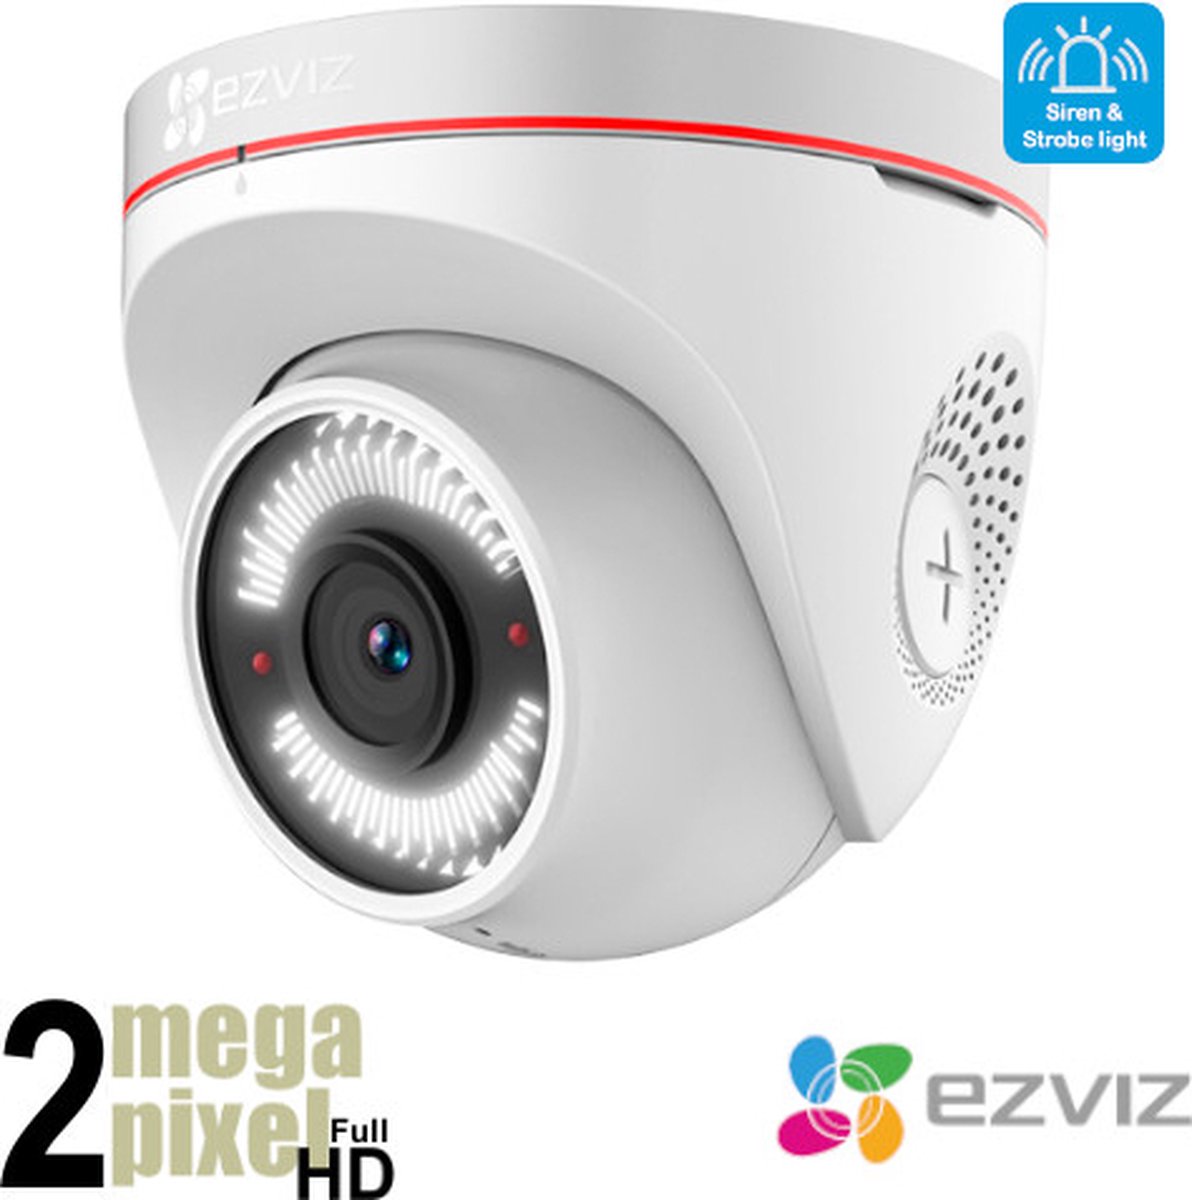 Ezviz C4W Full HD WiFi dome camera - stroboscoop - sirene - SD-kaart slot - EZC4W